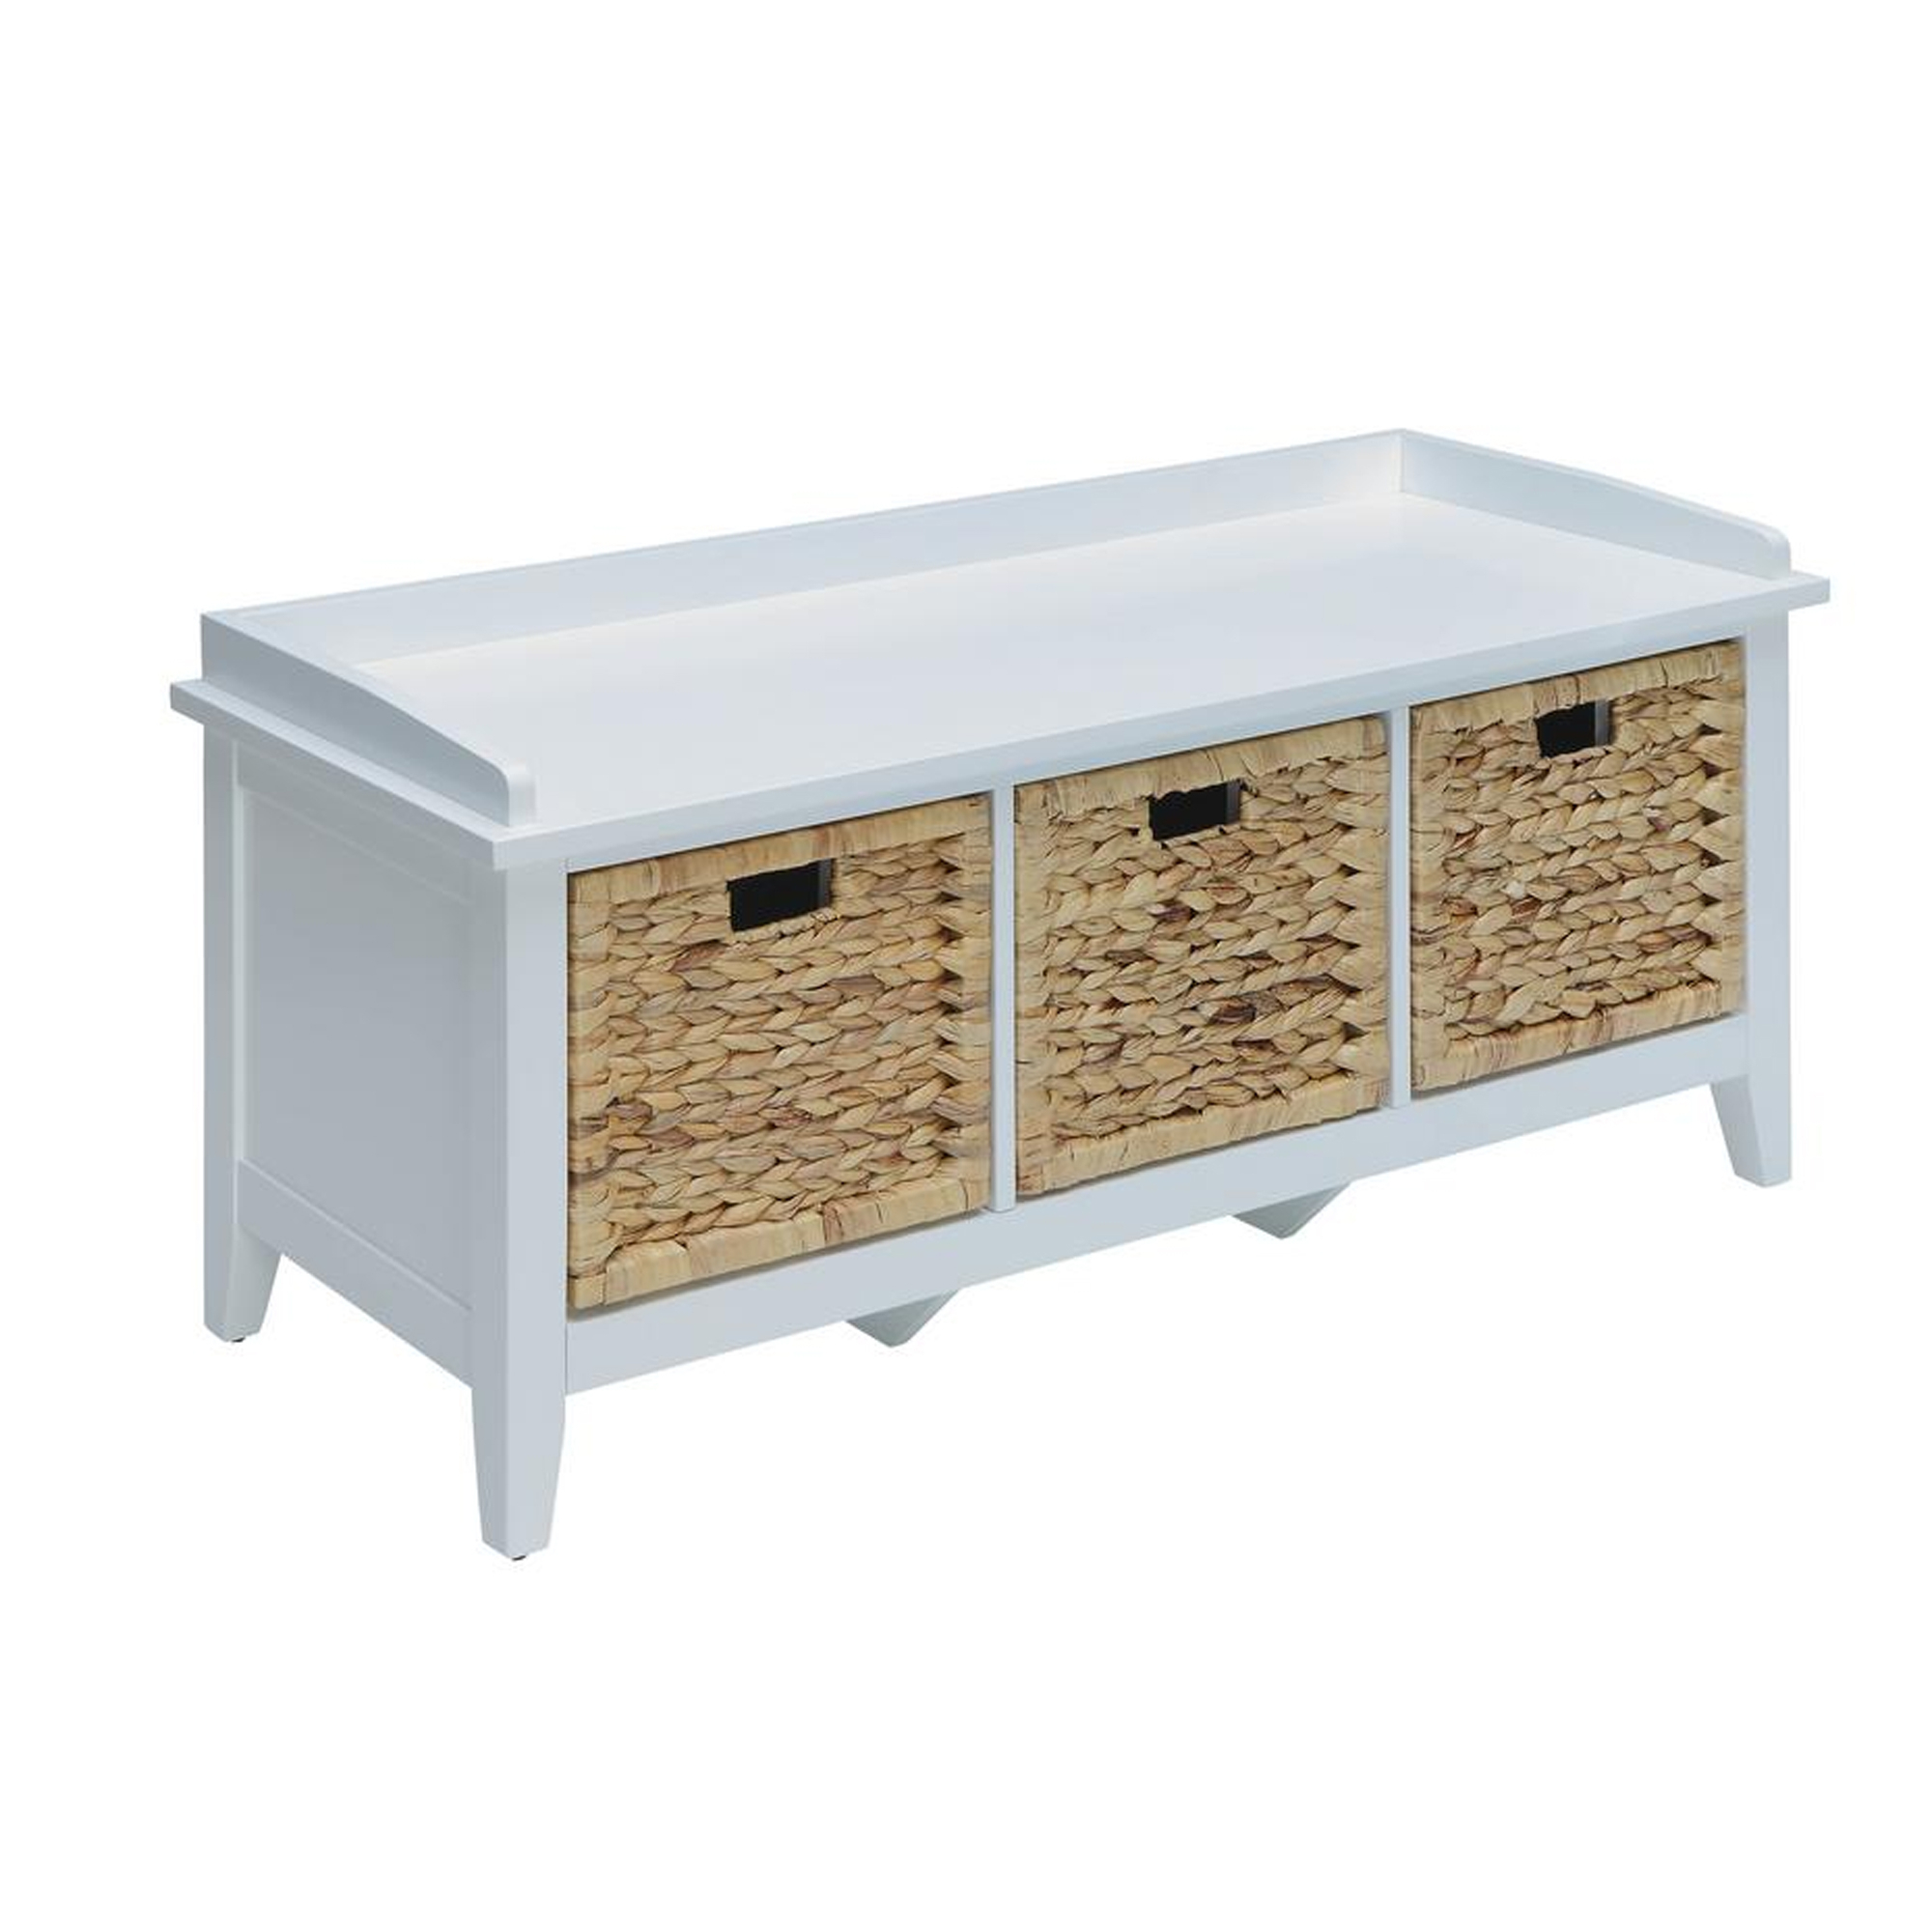 Rectangular Wooden Bench With Storage Basket, White- Saltoro Sherpi